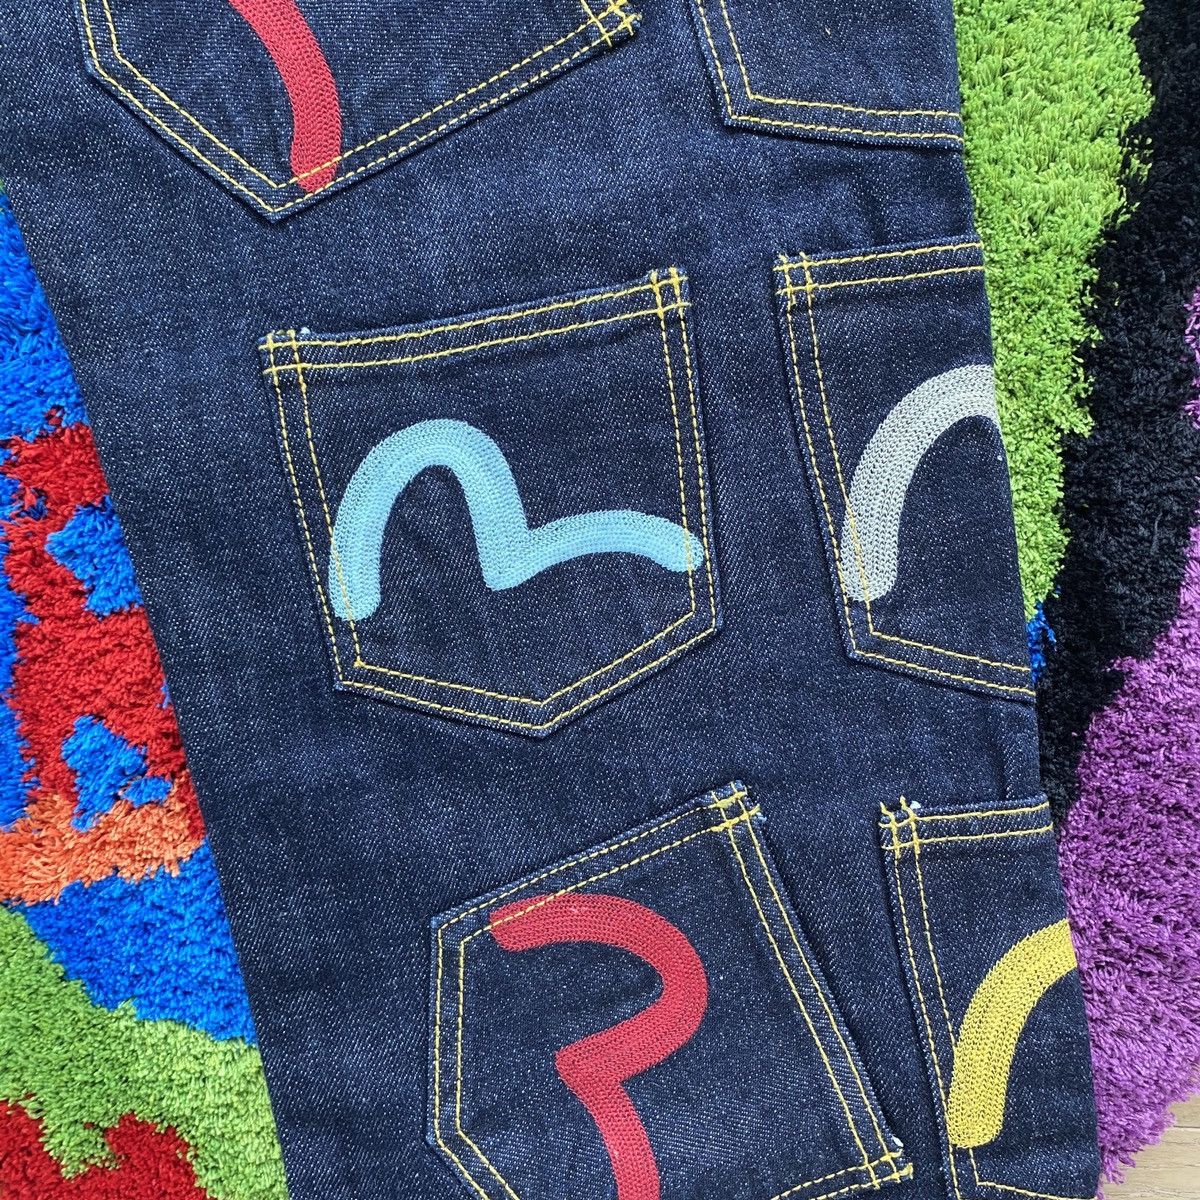 Vintage Evisu Multi Pockets Selvage Denim Jeans (Logo Embroidered) Size US 32 / EU 48 - 9 Thumbnail